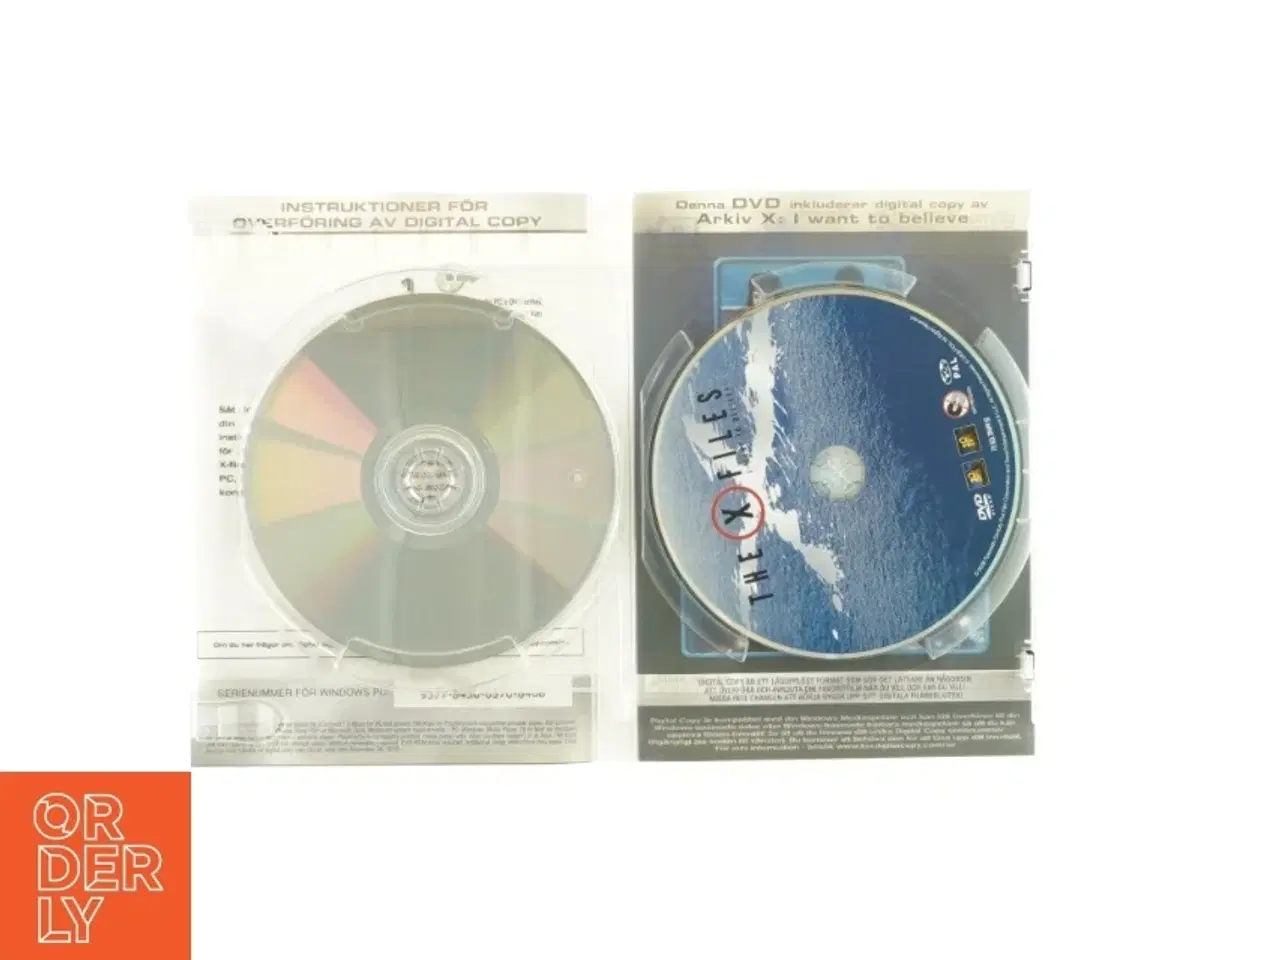 Billede 4 - Arkiv X - I wnat to believe (DVD)